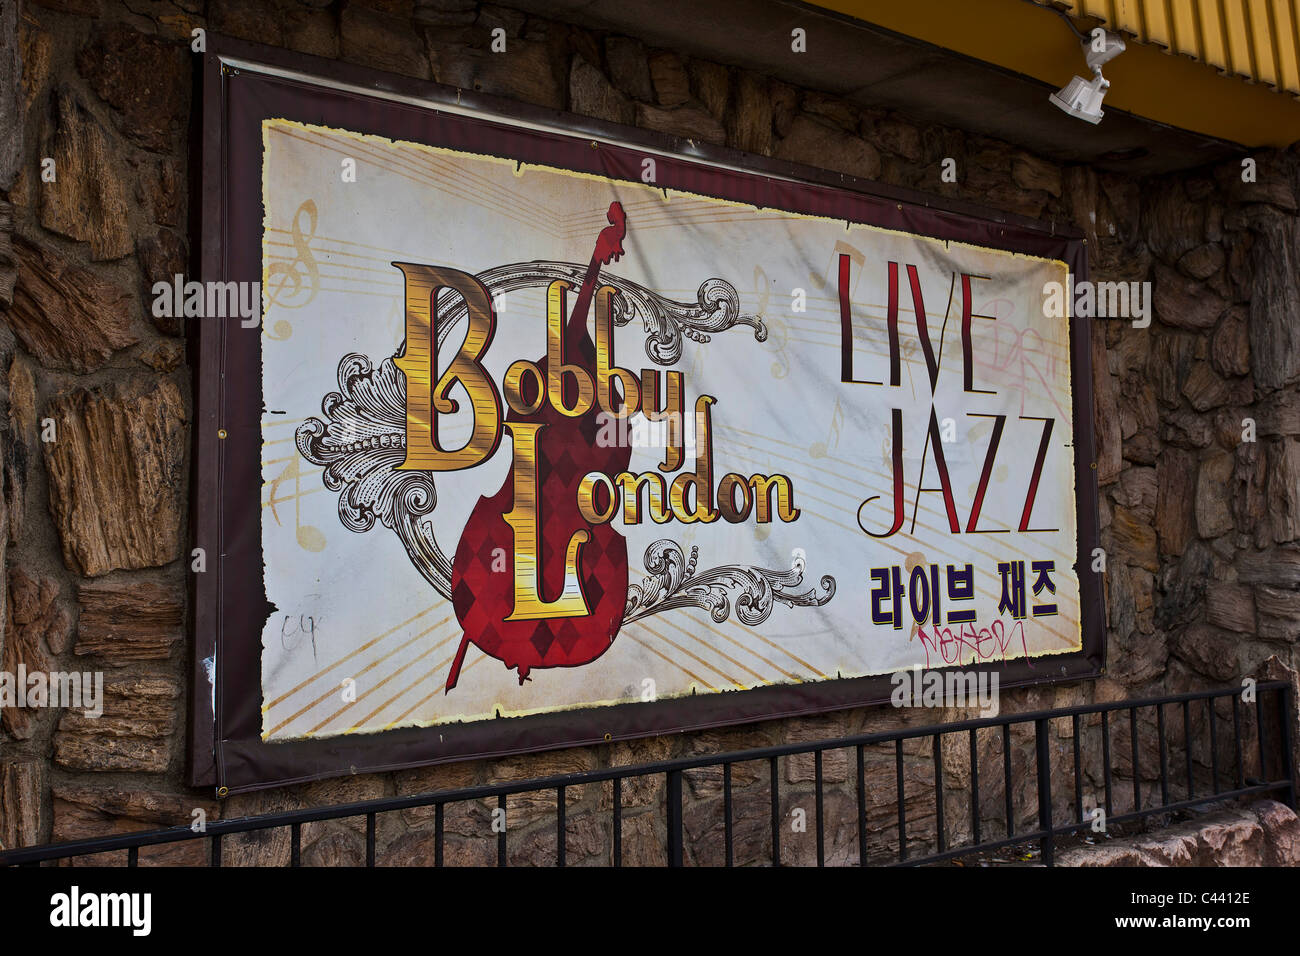 Banner de jazz, Korea Town, Los Angeles, California Foto de stock